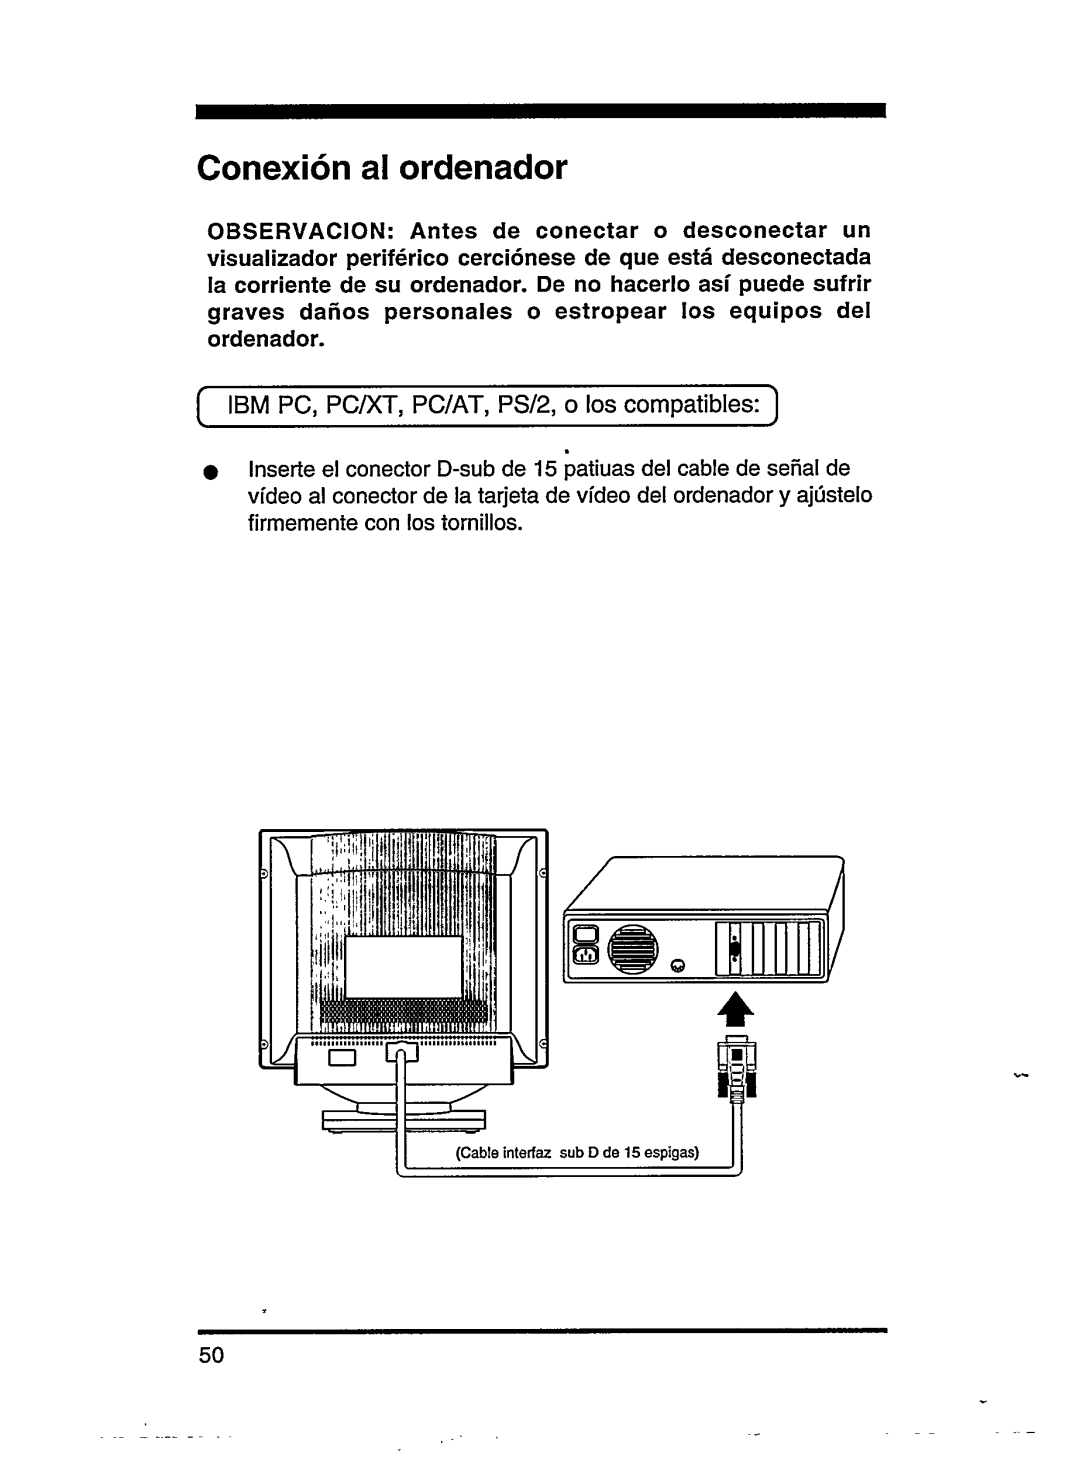 Philips 7CM5209 manual 